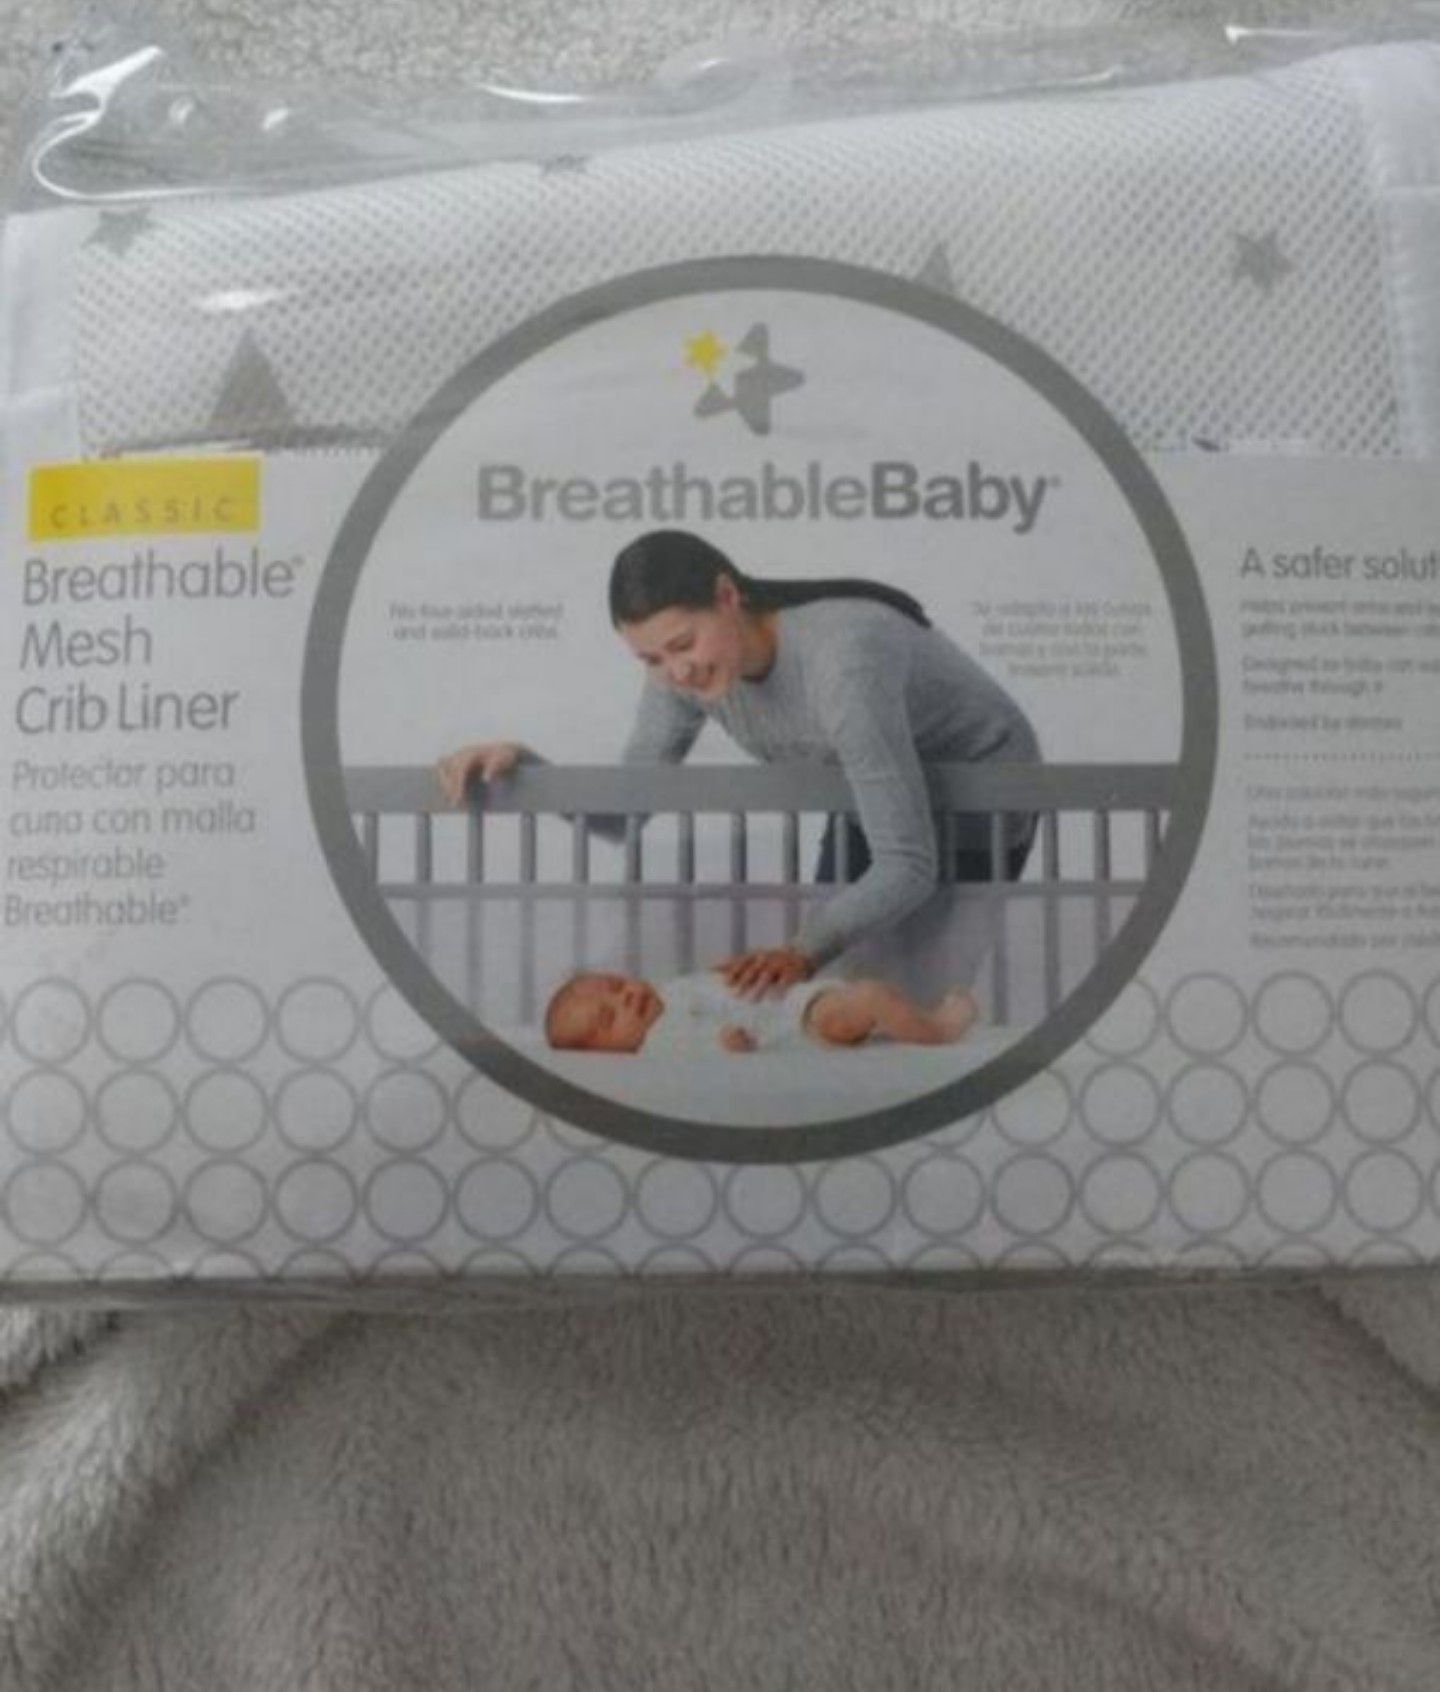 Breathable mesh crib liner